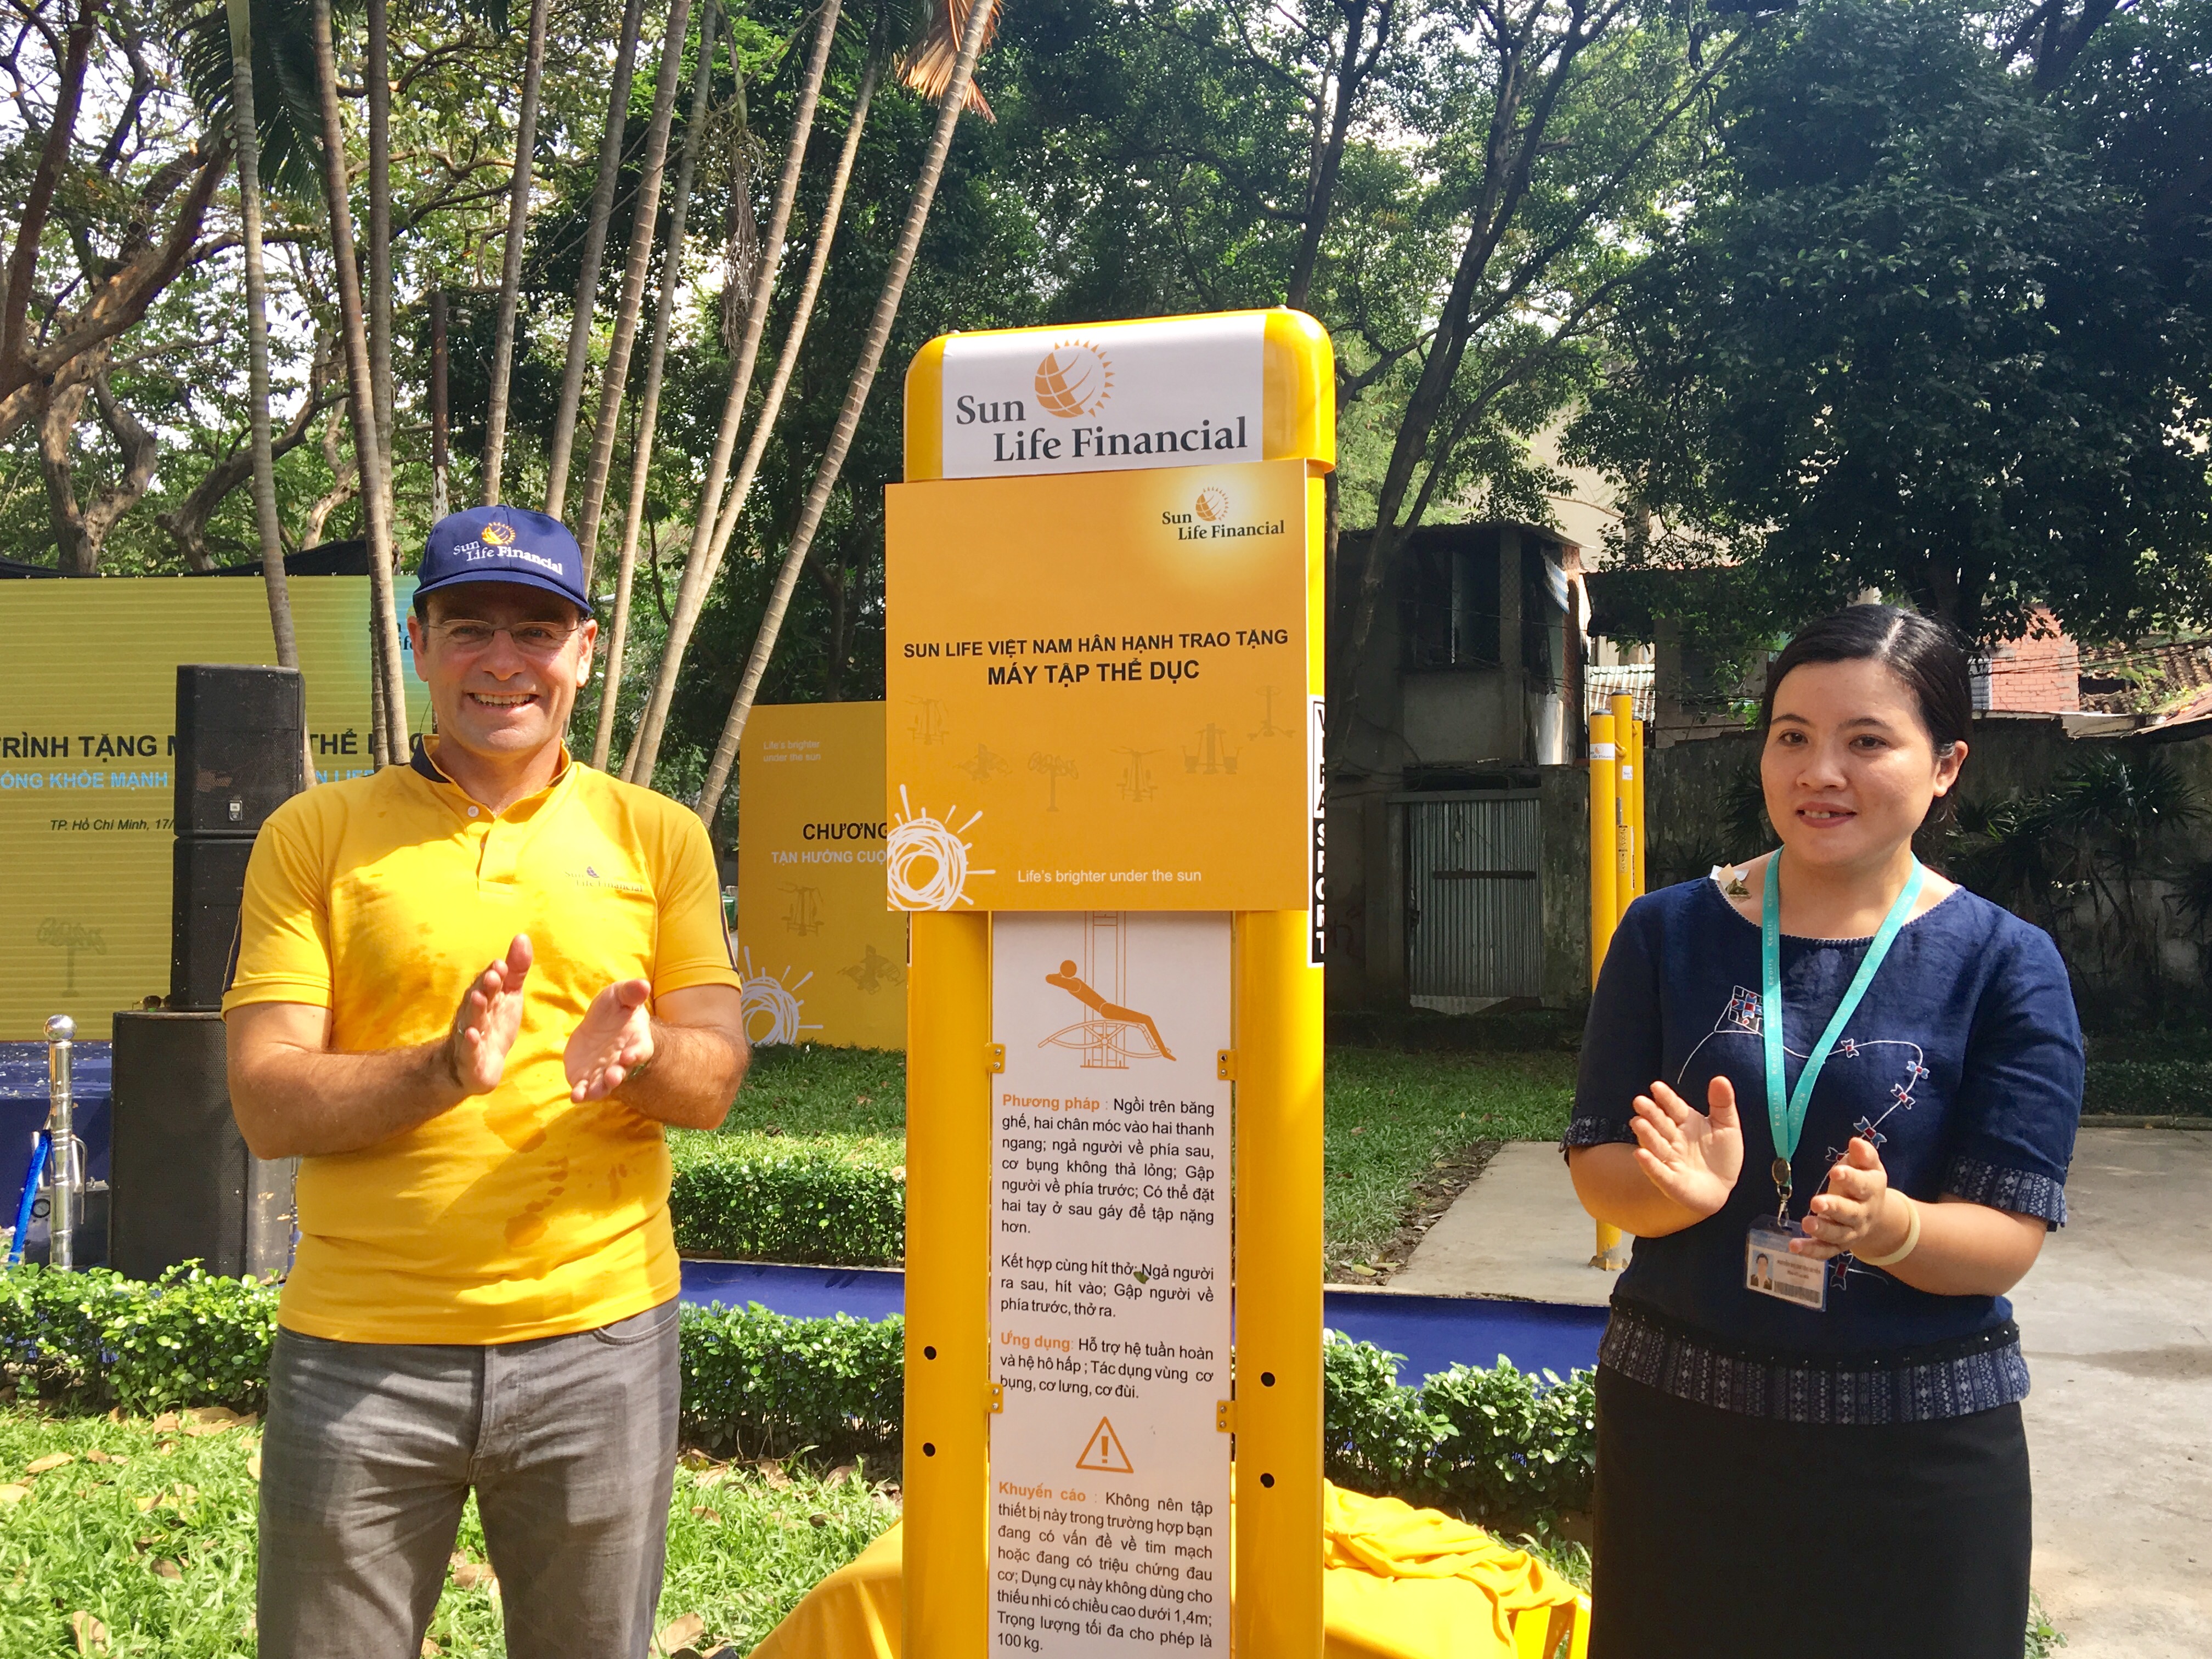 sun life vietnam donates exercise equipment to help the community live a healthier lifestyle